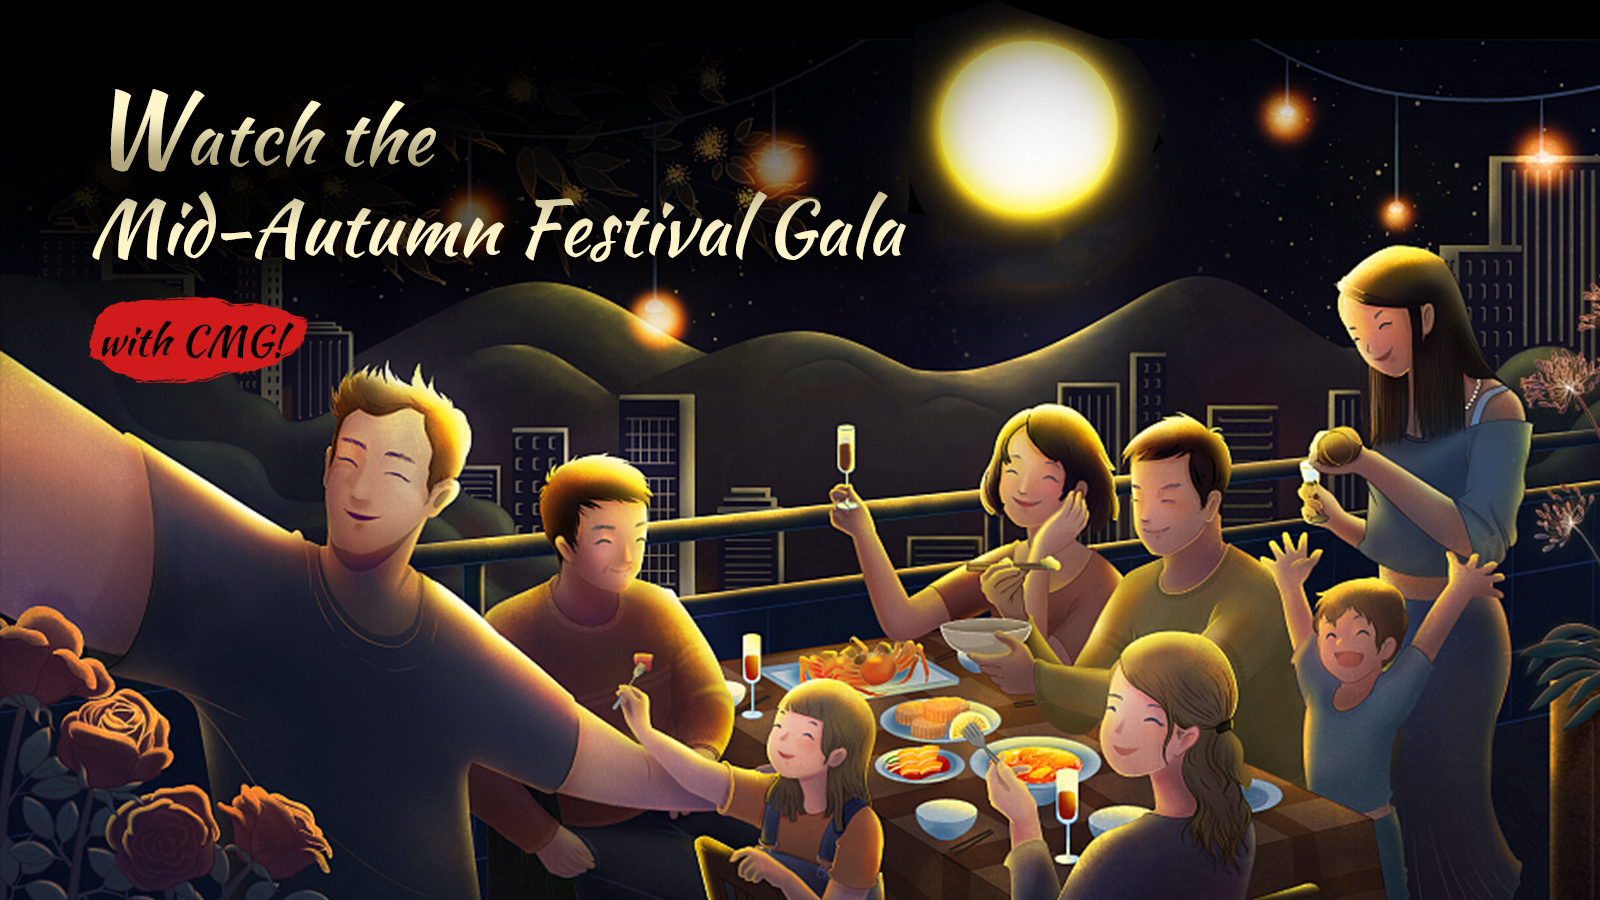 Watch the MidAutumn Festival Gala with CMG! CGTN